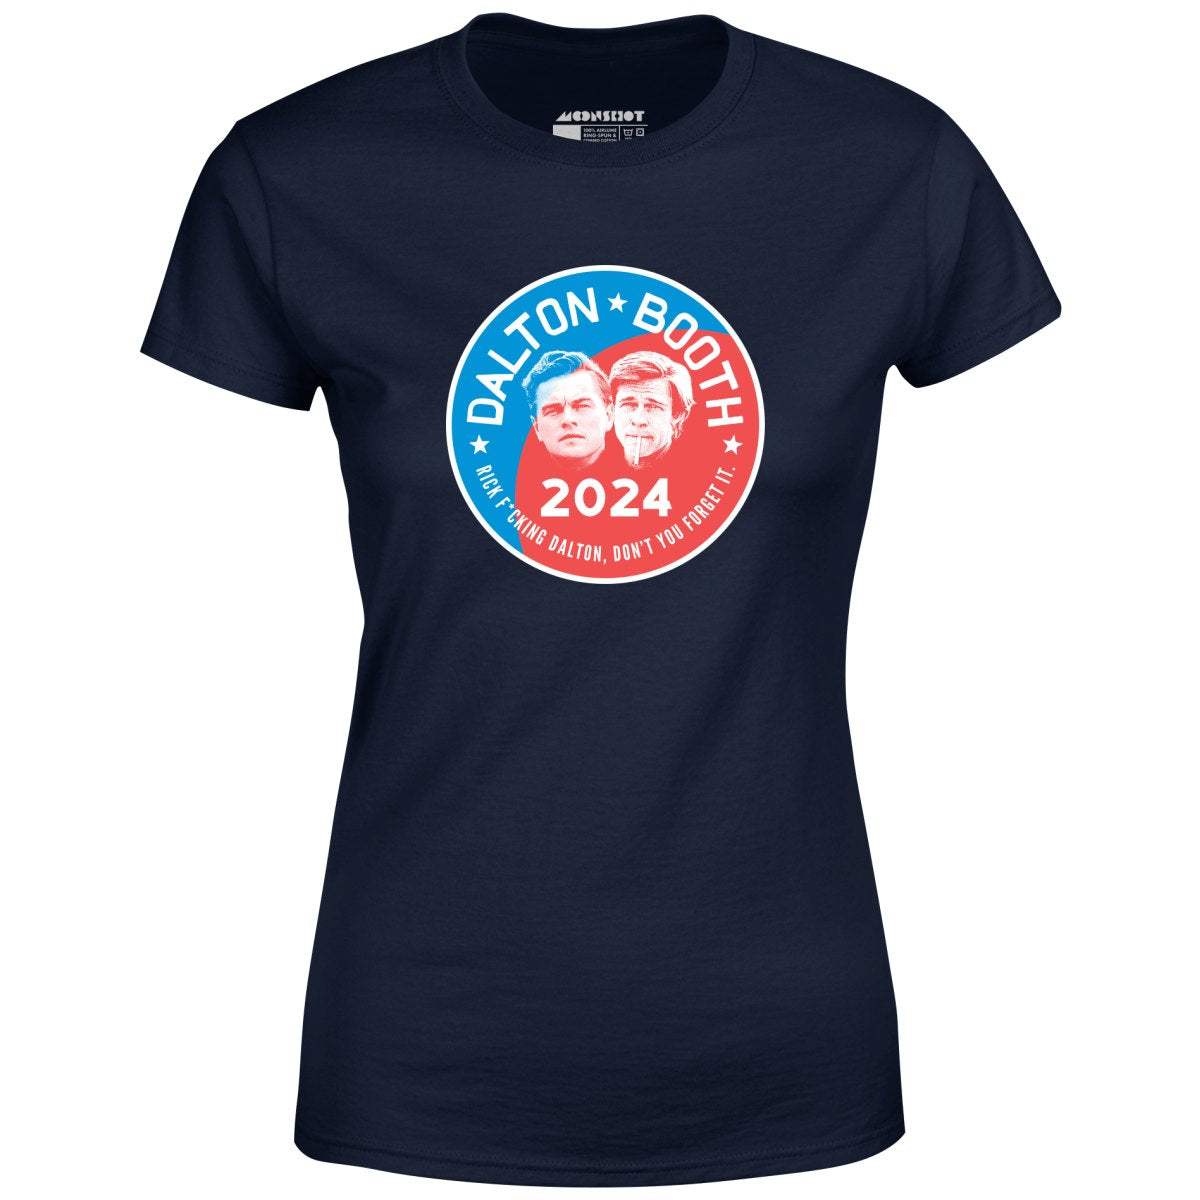 Dalton Booth 2024 - Women's T-Shirt